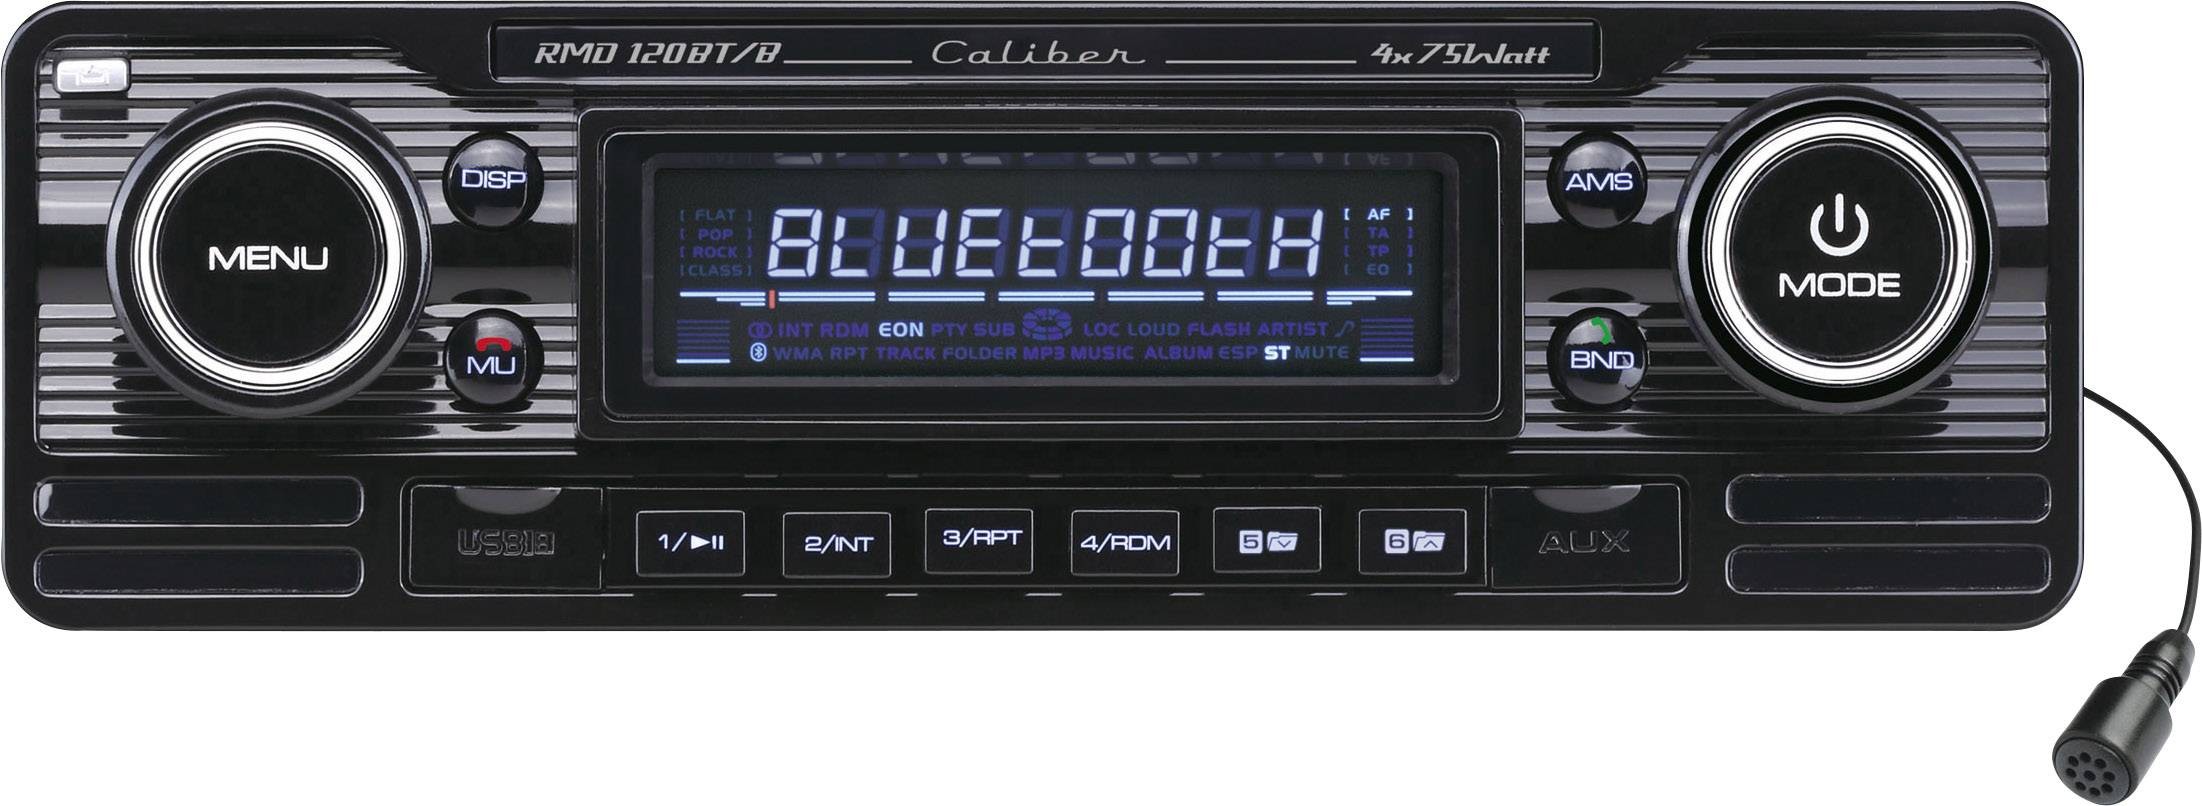 Netelig betaling Siësta CALIBER Autoradio Retro Look Black Met Bluetooth - Usb - Aux kopen?